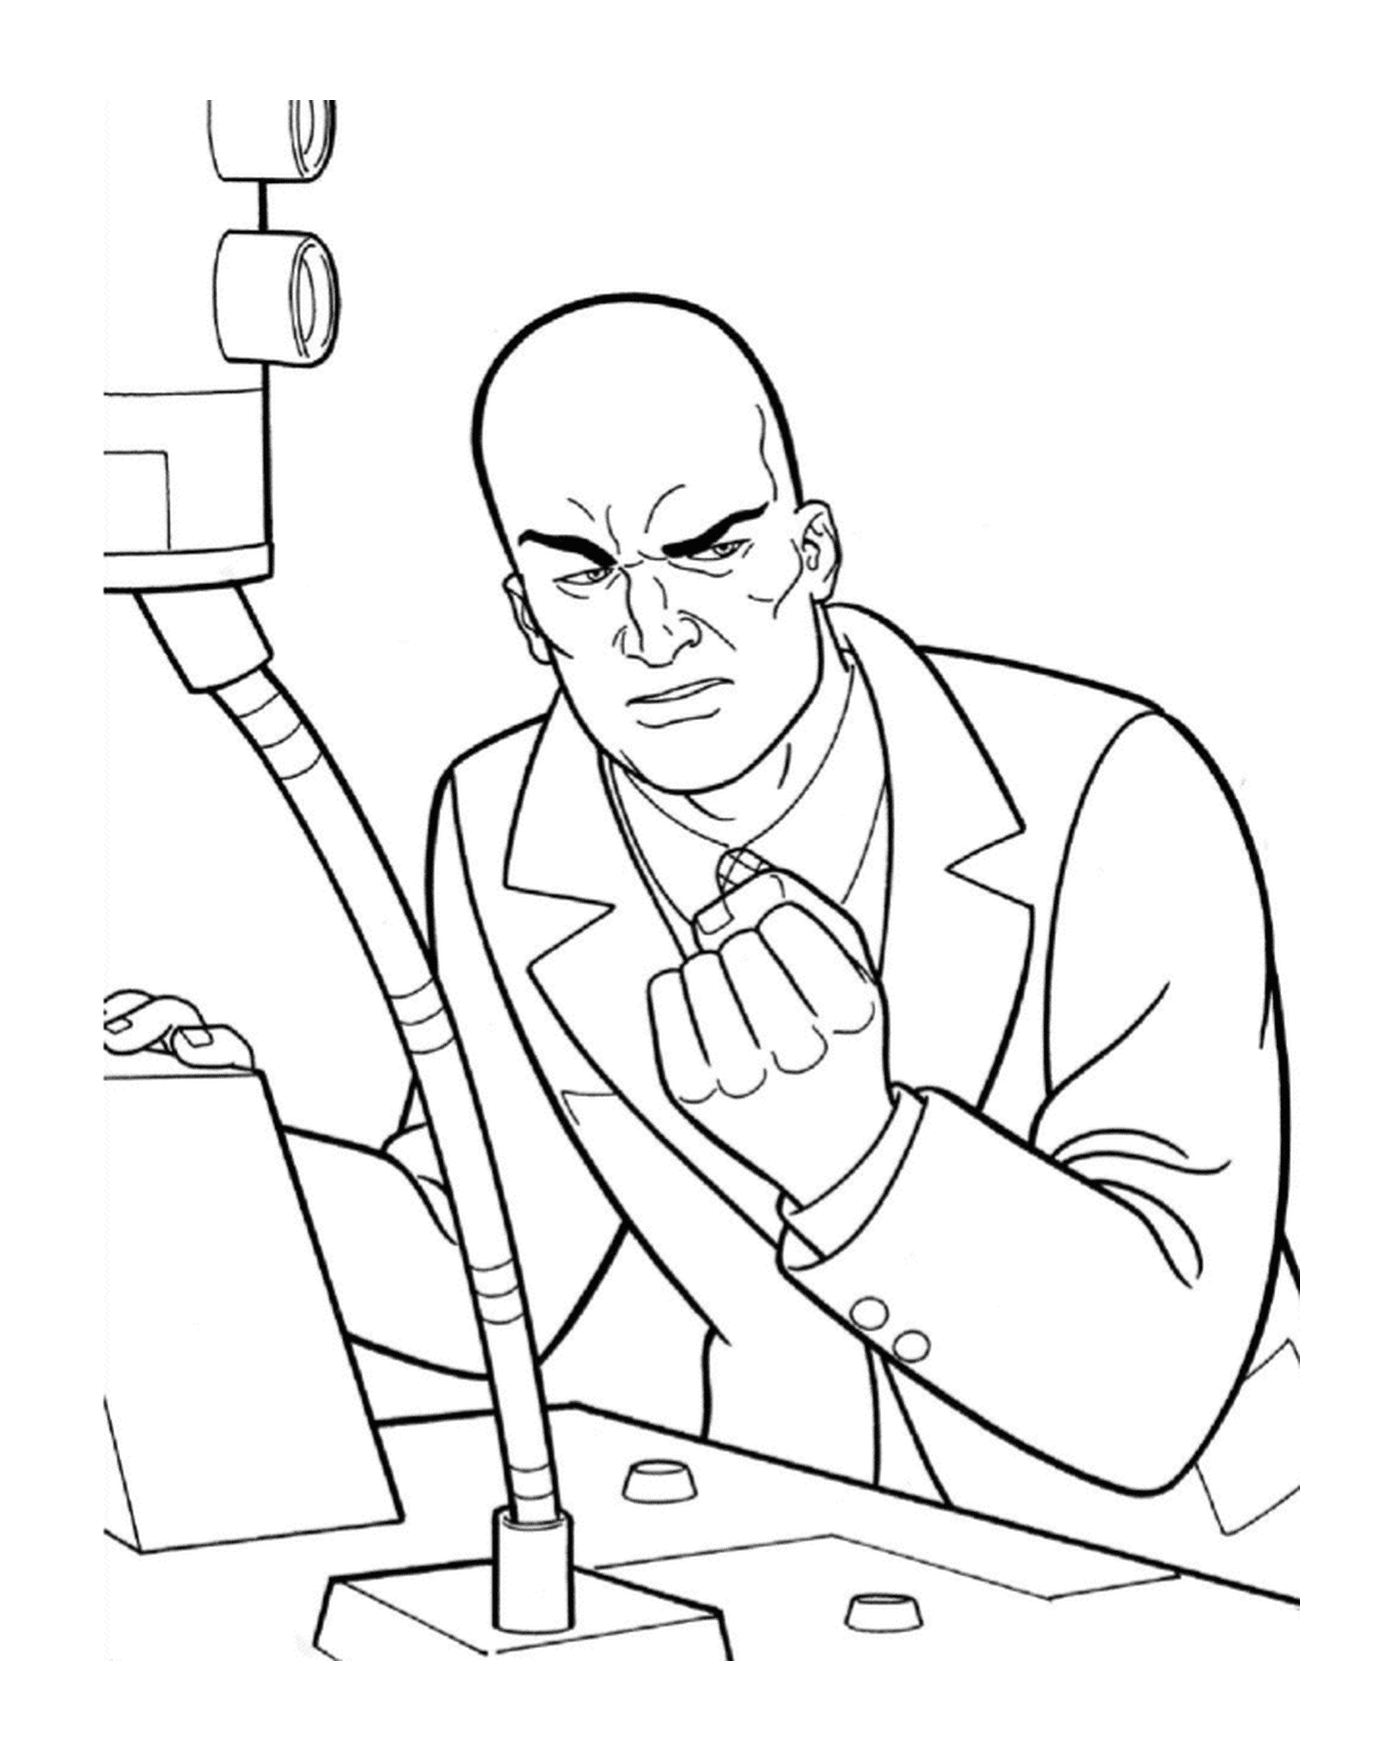  Lex Luthor, the businessman 